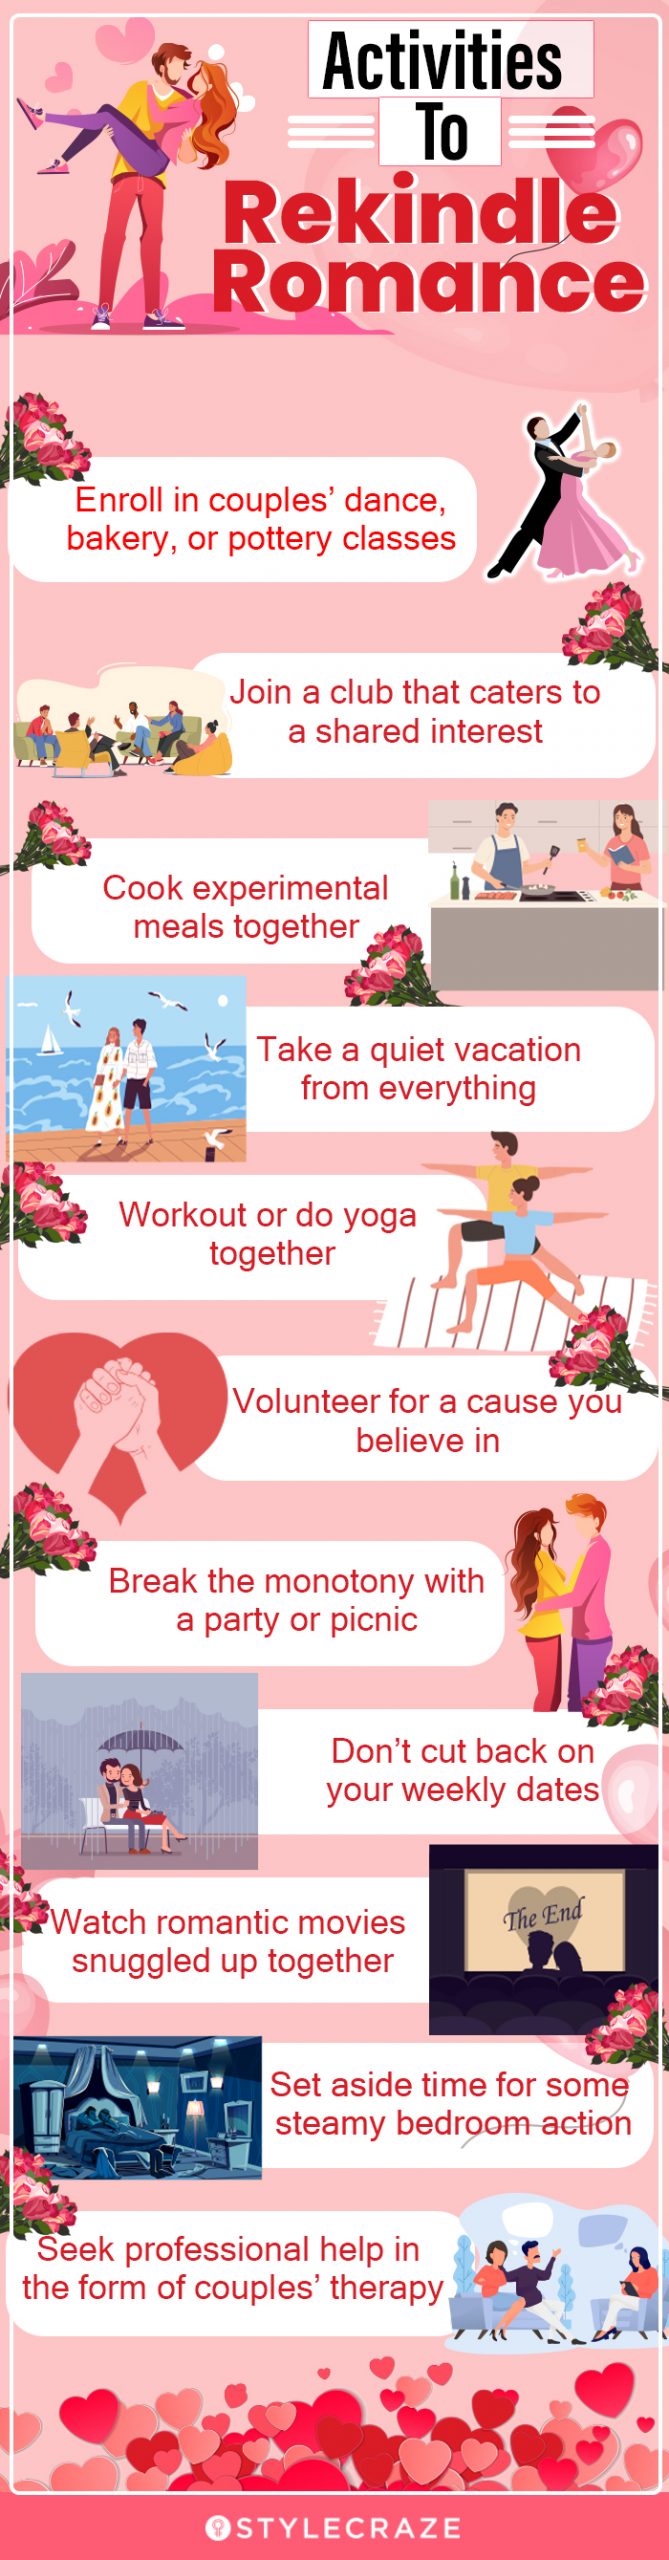 activities to rekindle romance [infographic]